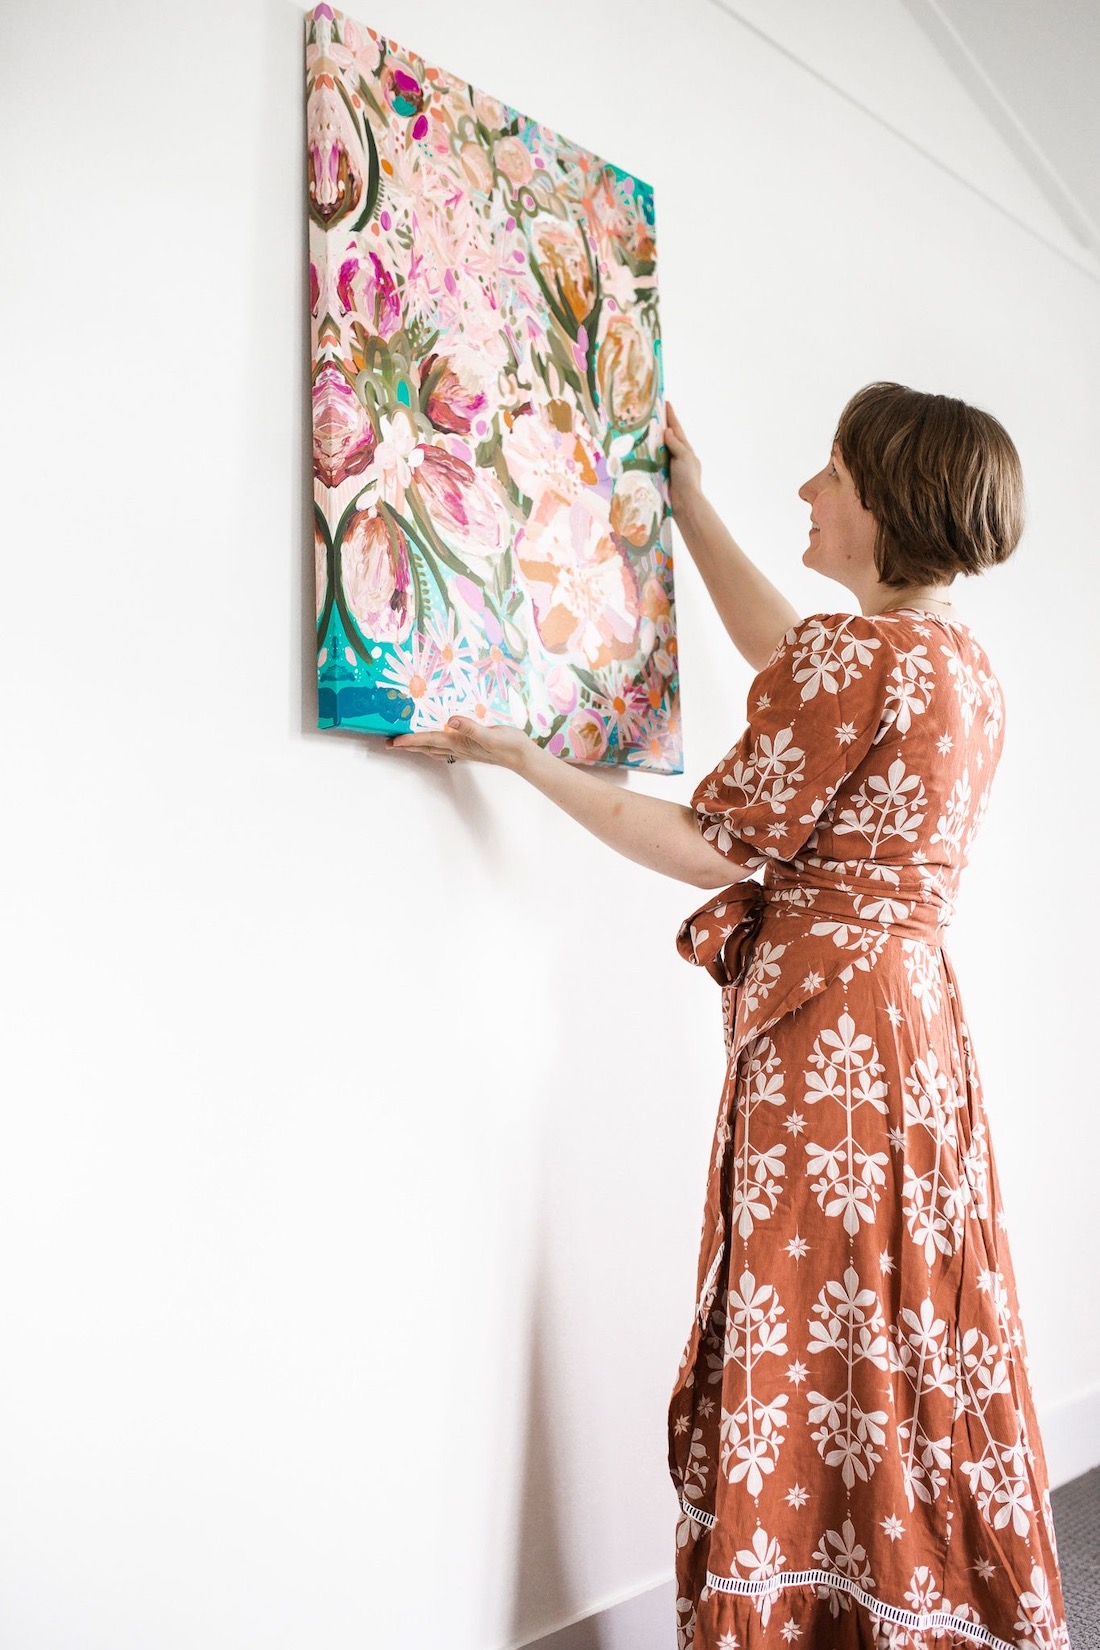 Claire hanging her artwork _ vibrant Australian artworks